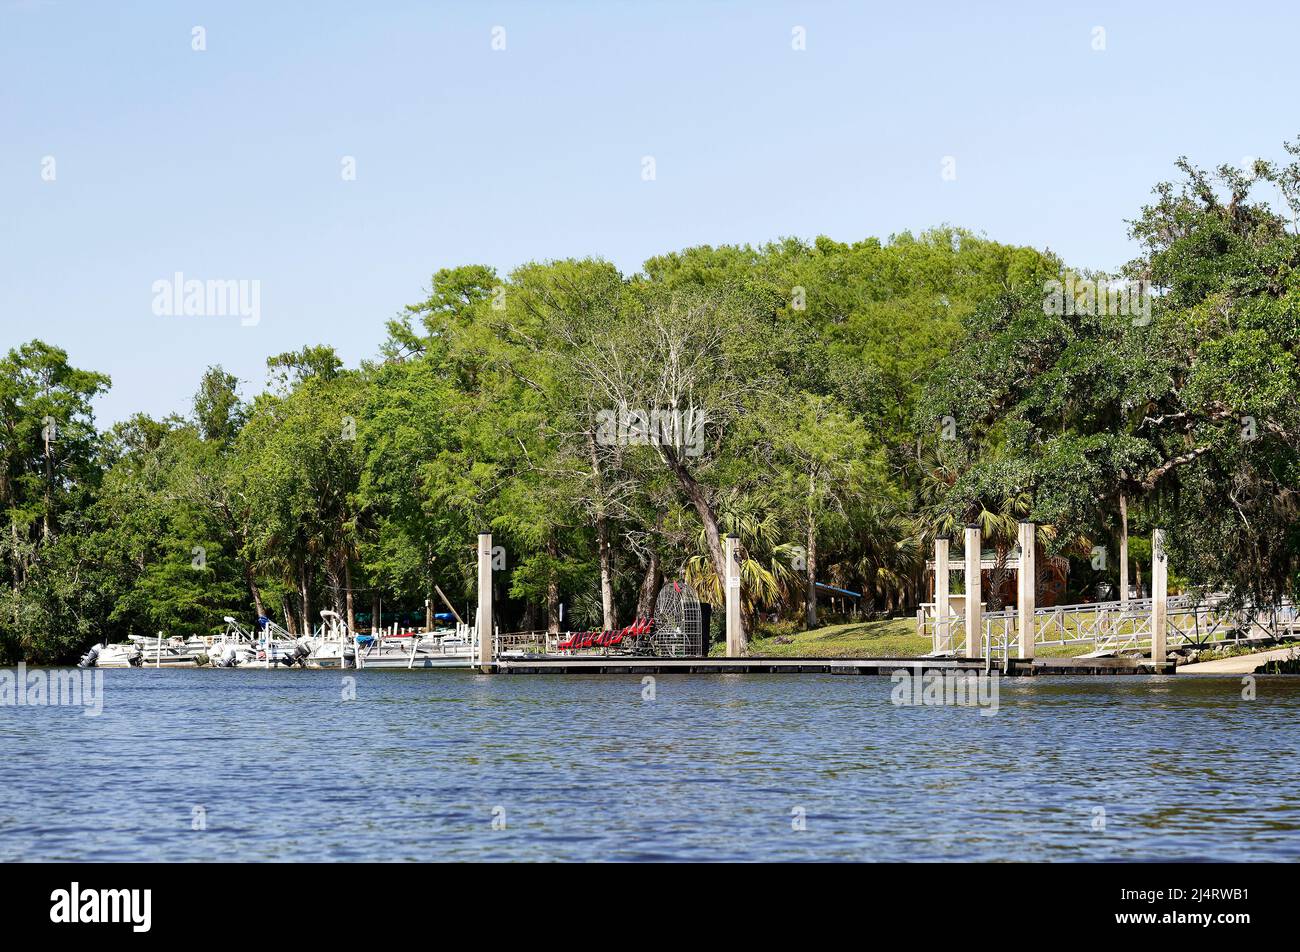 boat docks, pier, airboat, small motor boats, ramp, trees, water, recreation, leisure, marine, Lettuce Lake Park, Florida, Arcadia, FL, spring Stock Photo